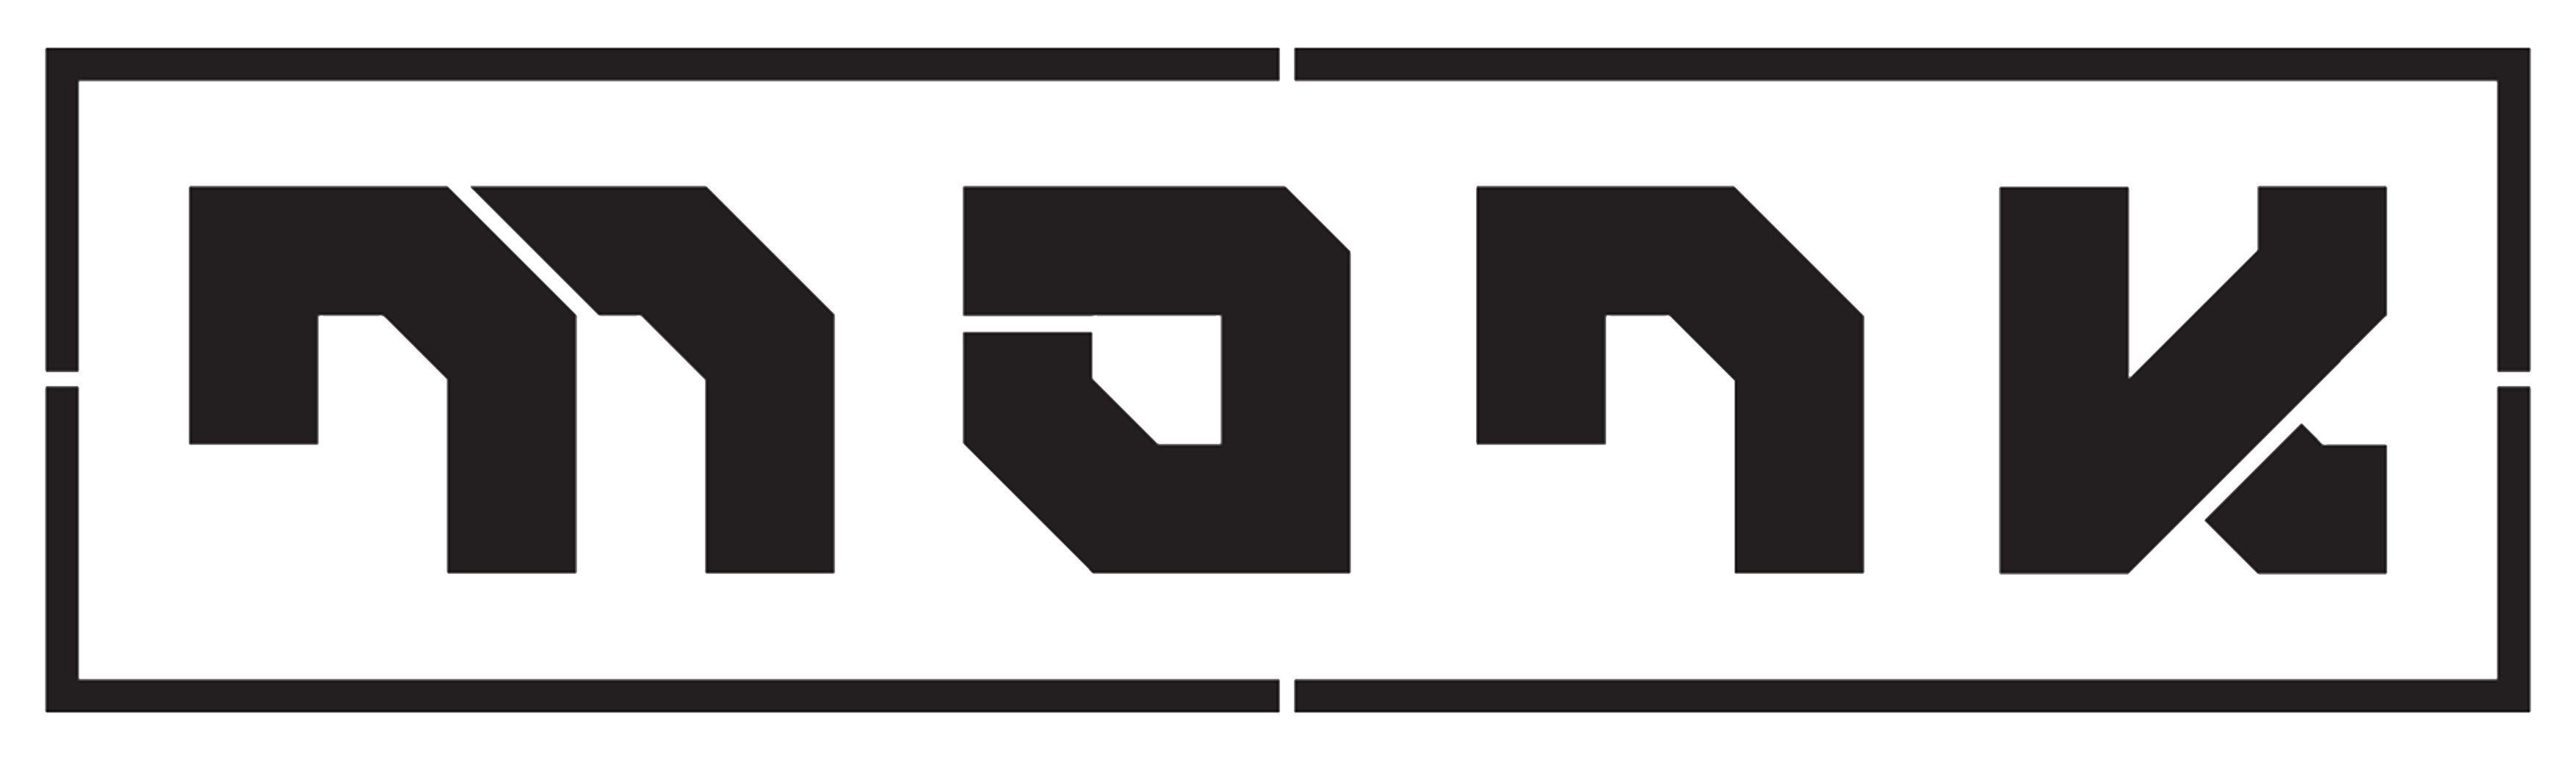 monk-bouadsgldergym-logo